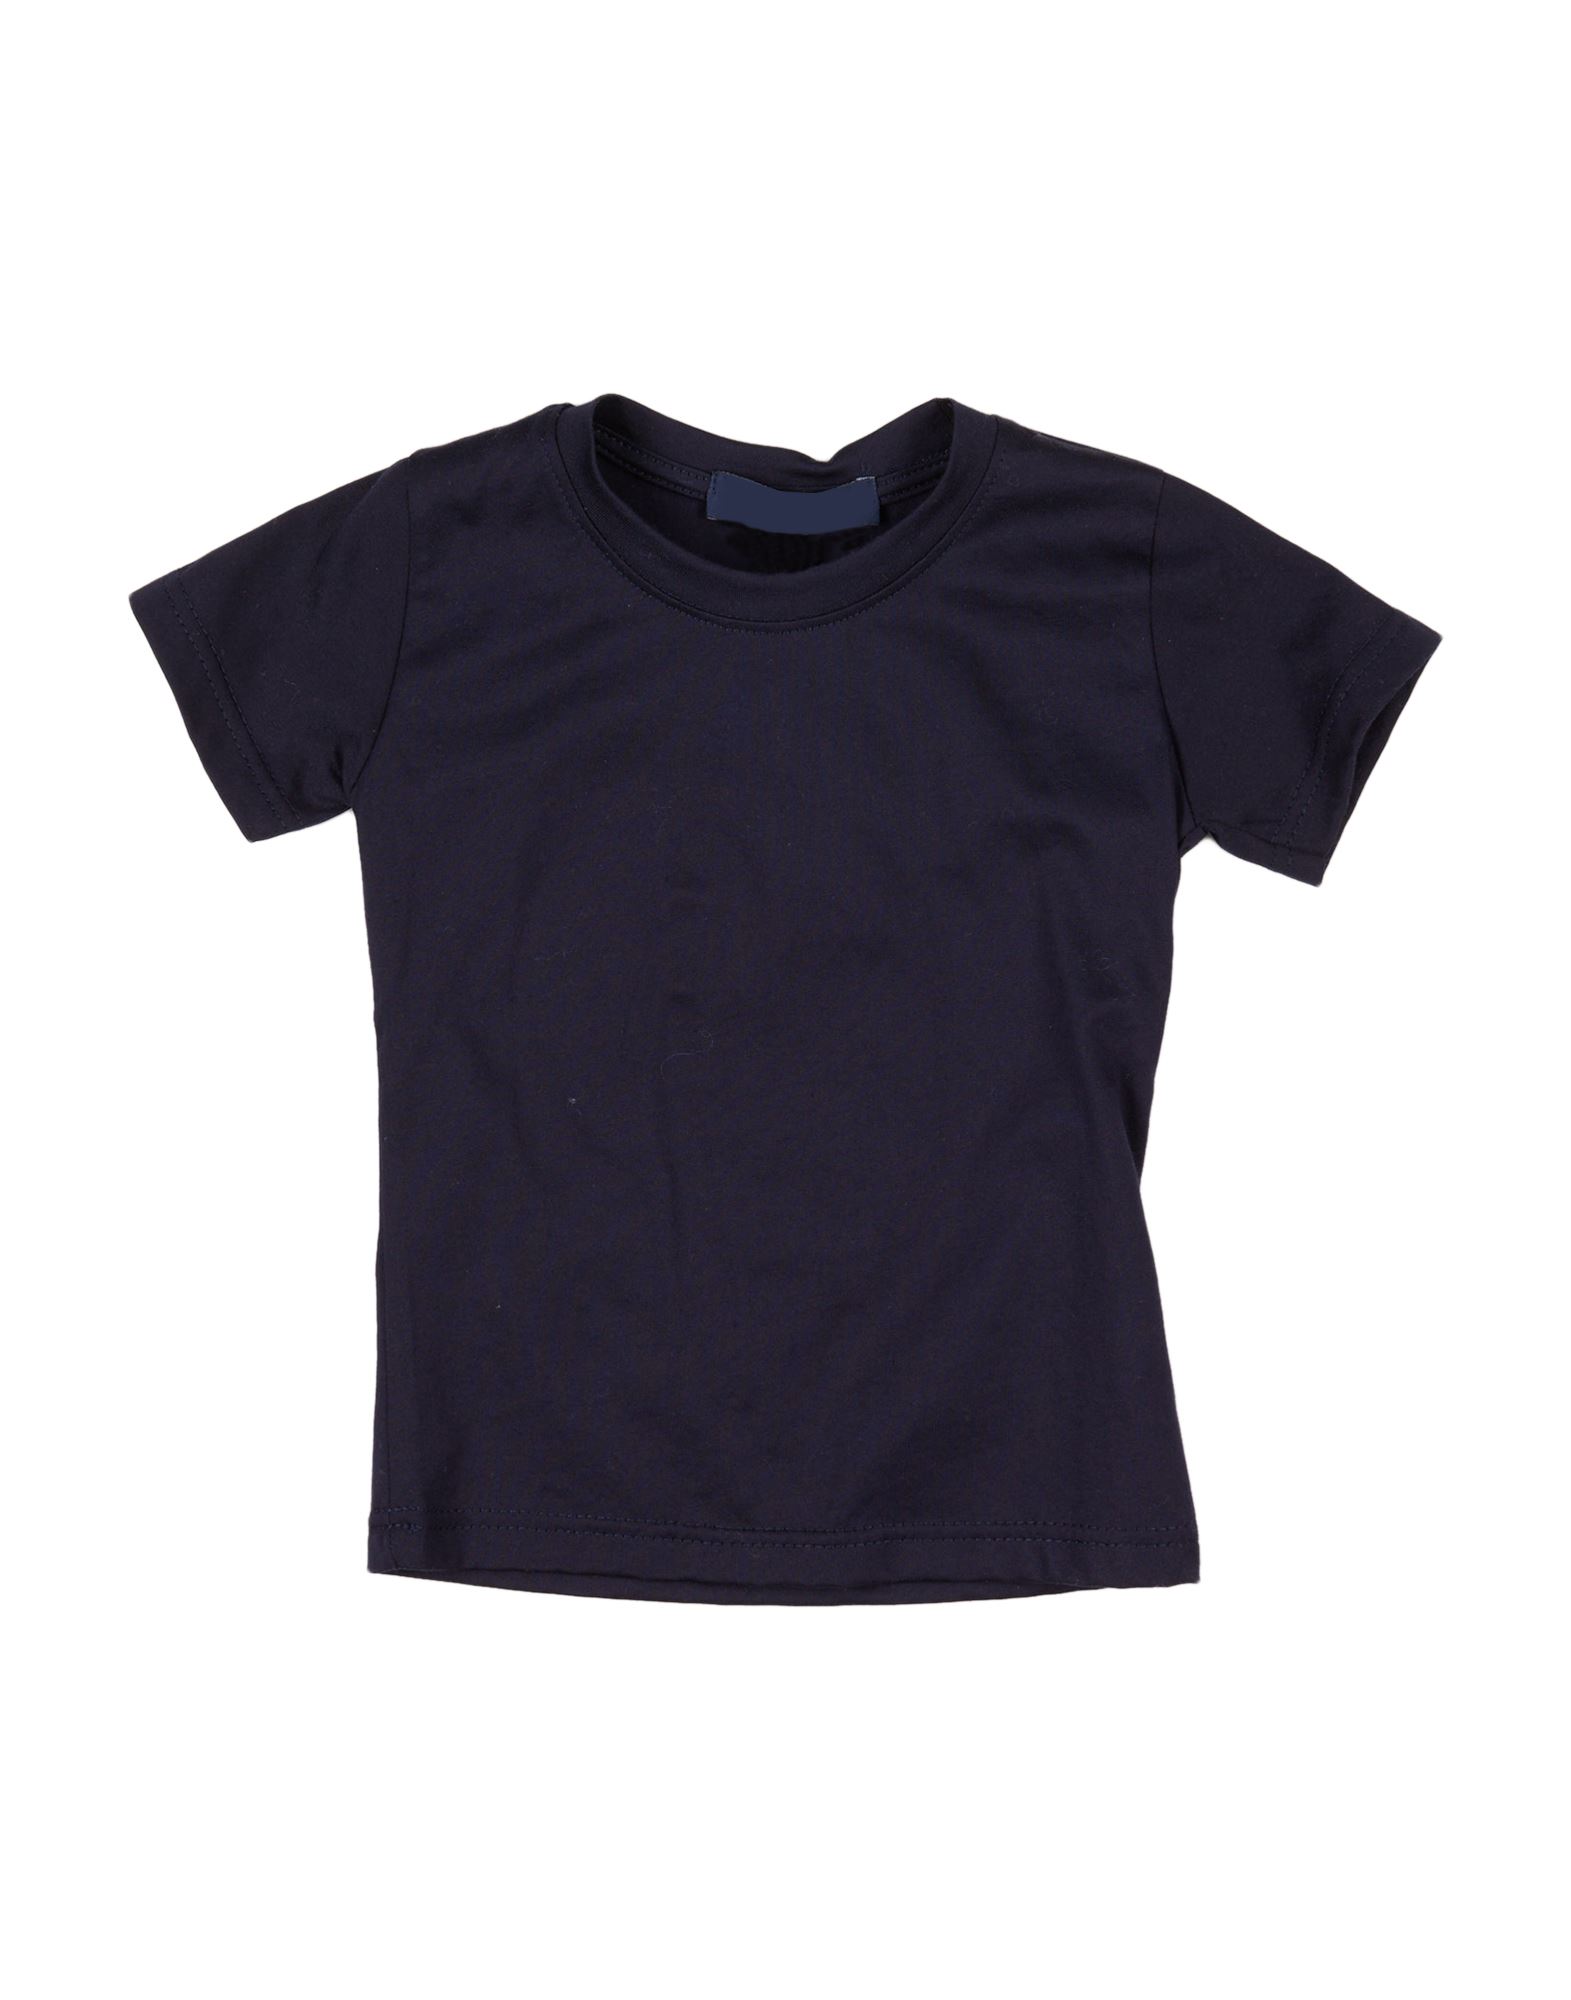 MANUELL & FRANK T-shirts Kinder Nachtblau von MANUELL & FRANK